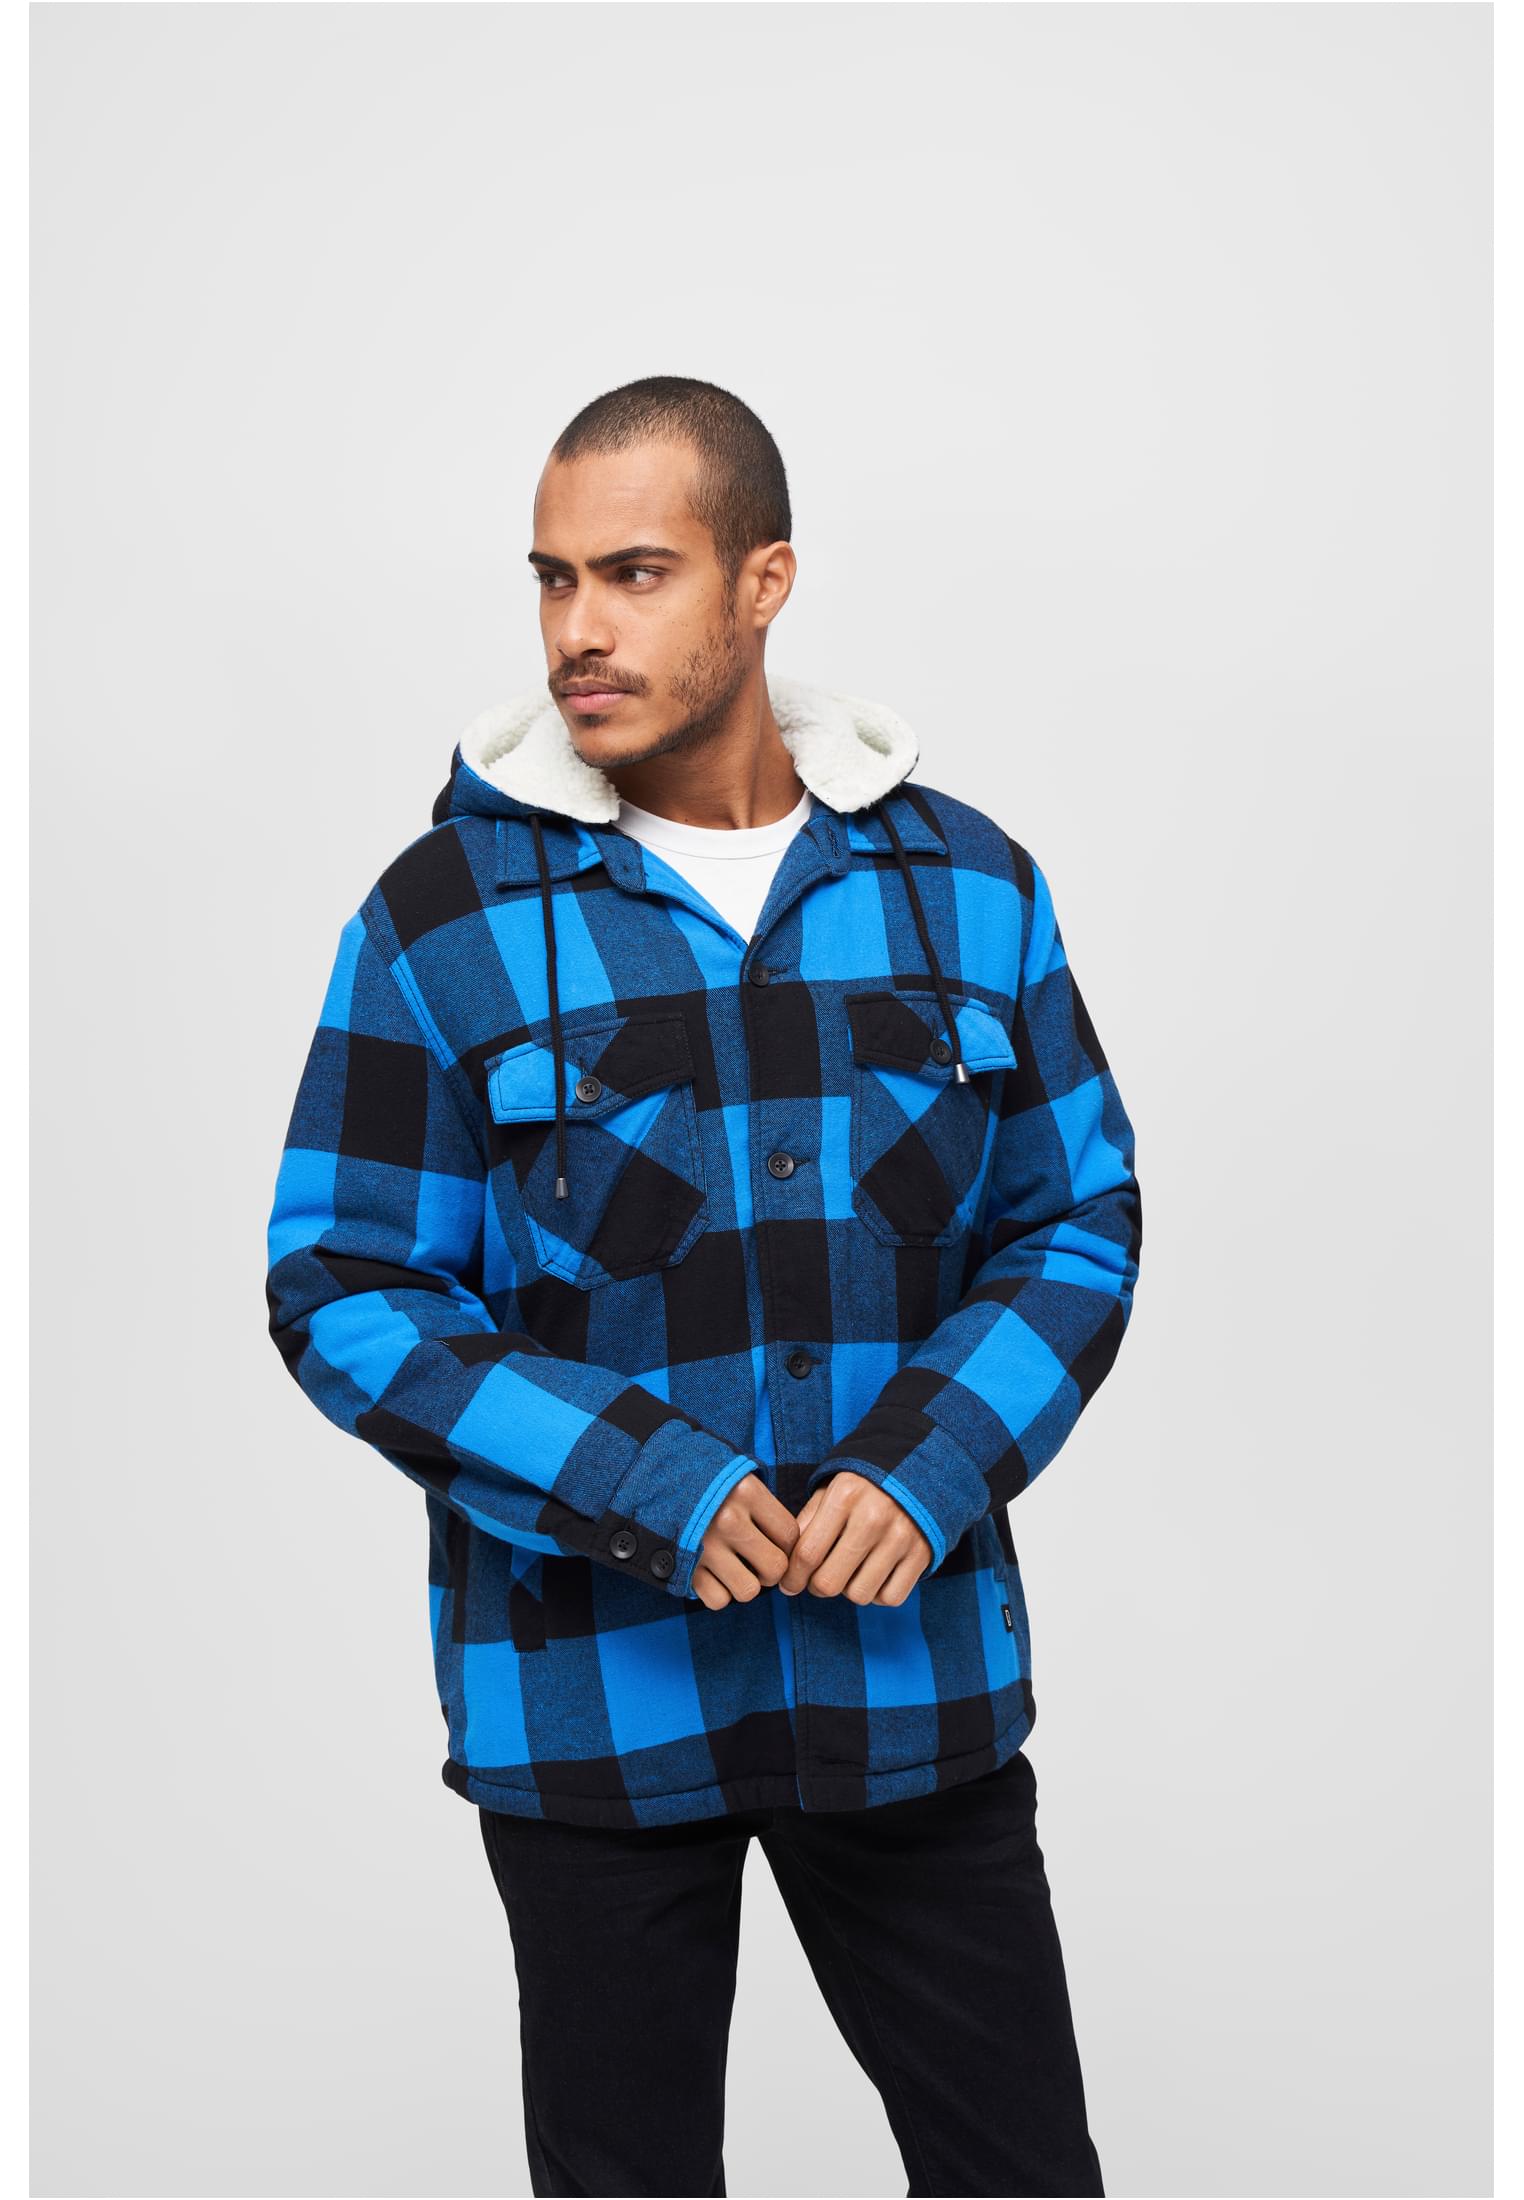 Jacken Lumberjacket Hooded in Farbe black/blue